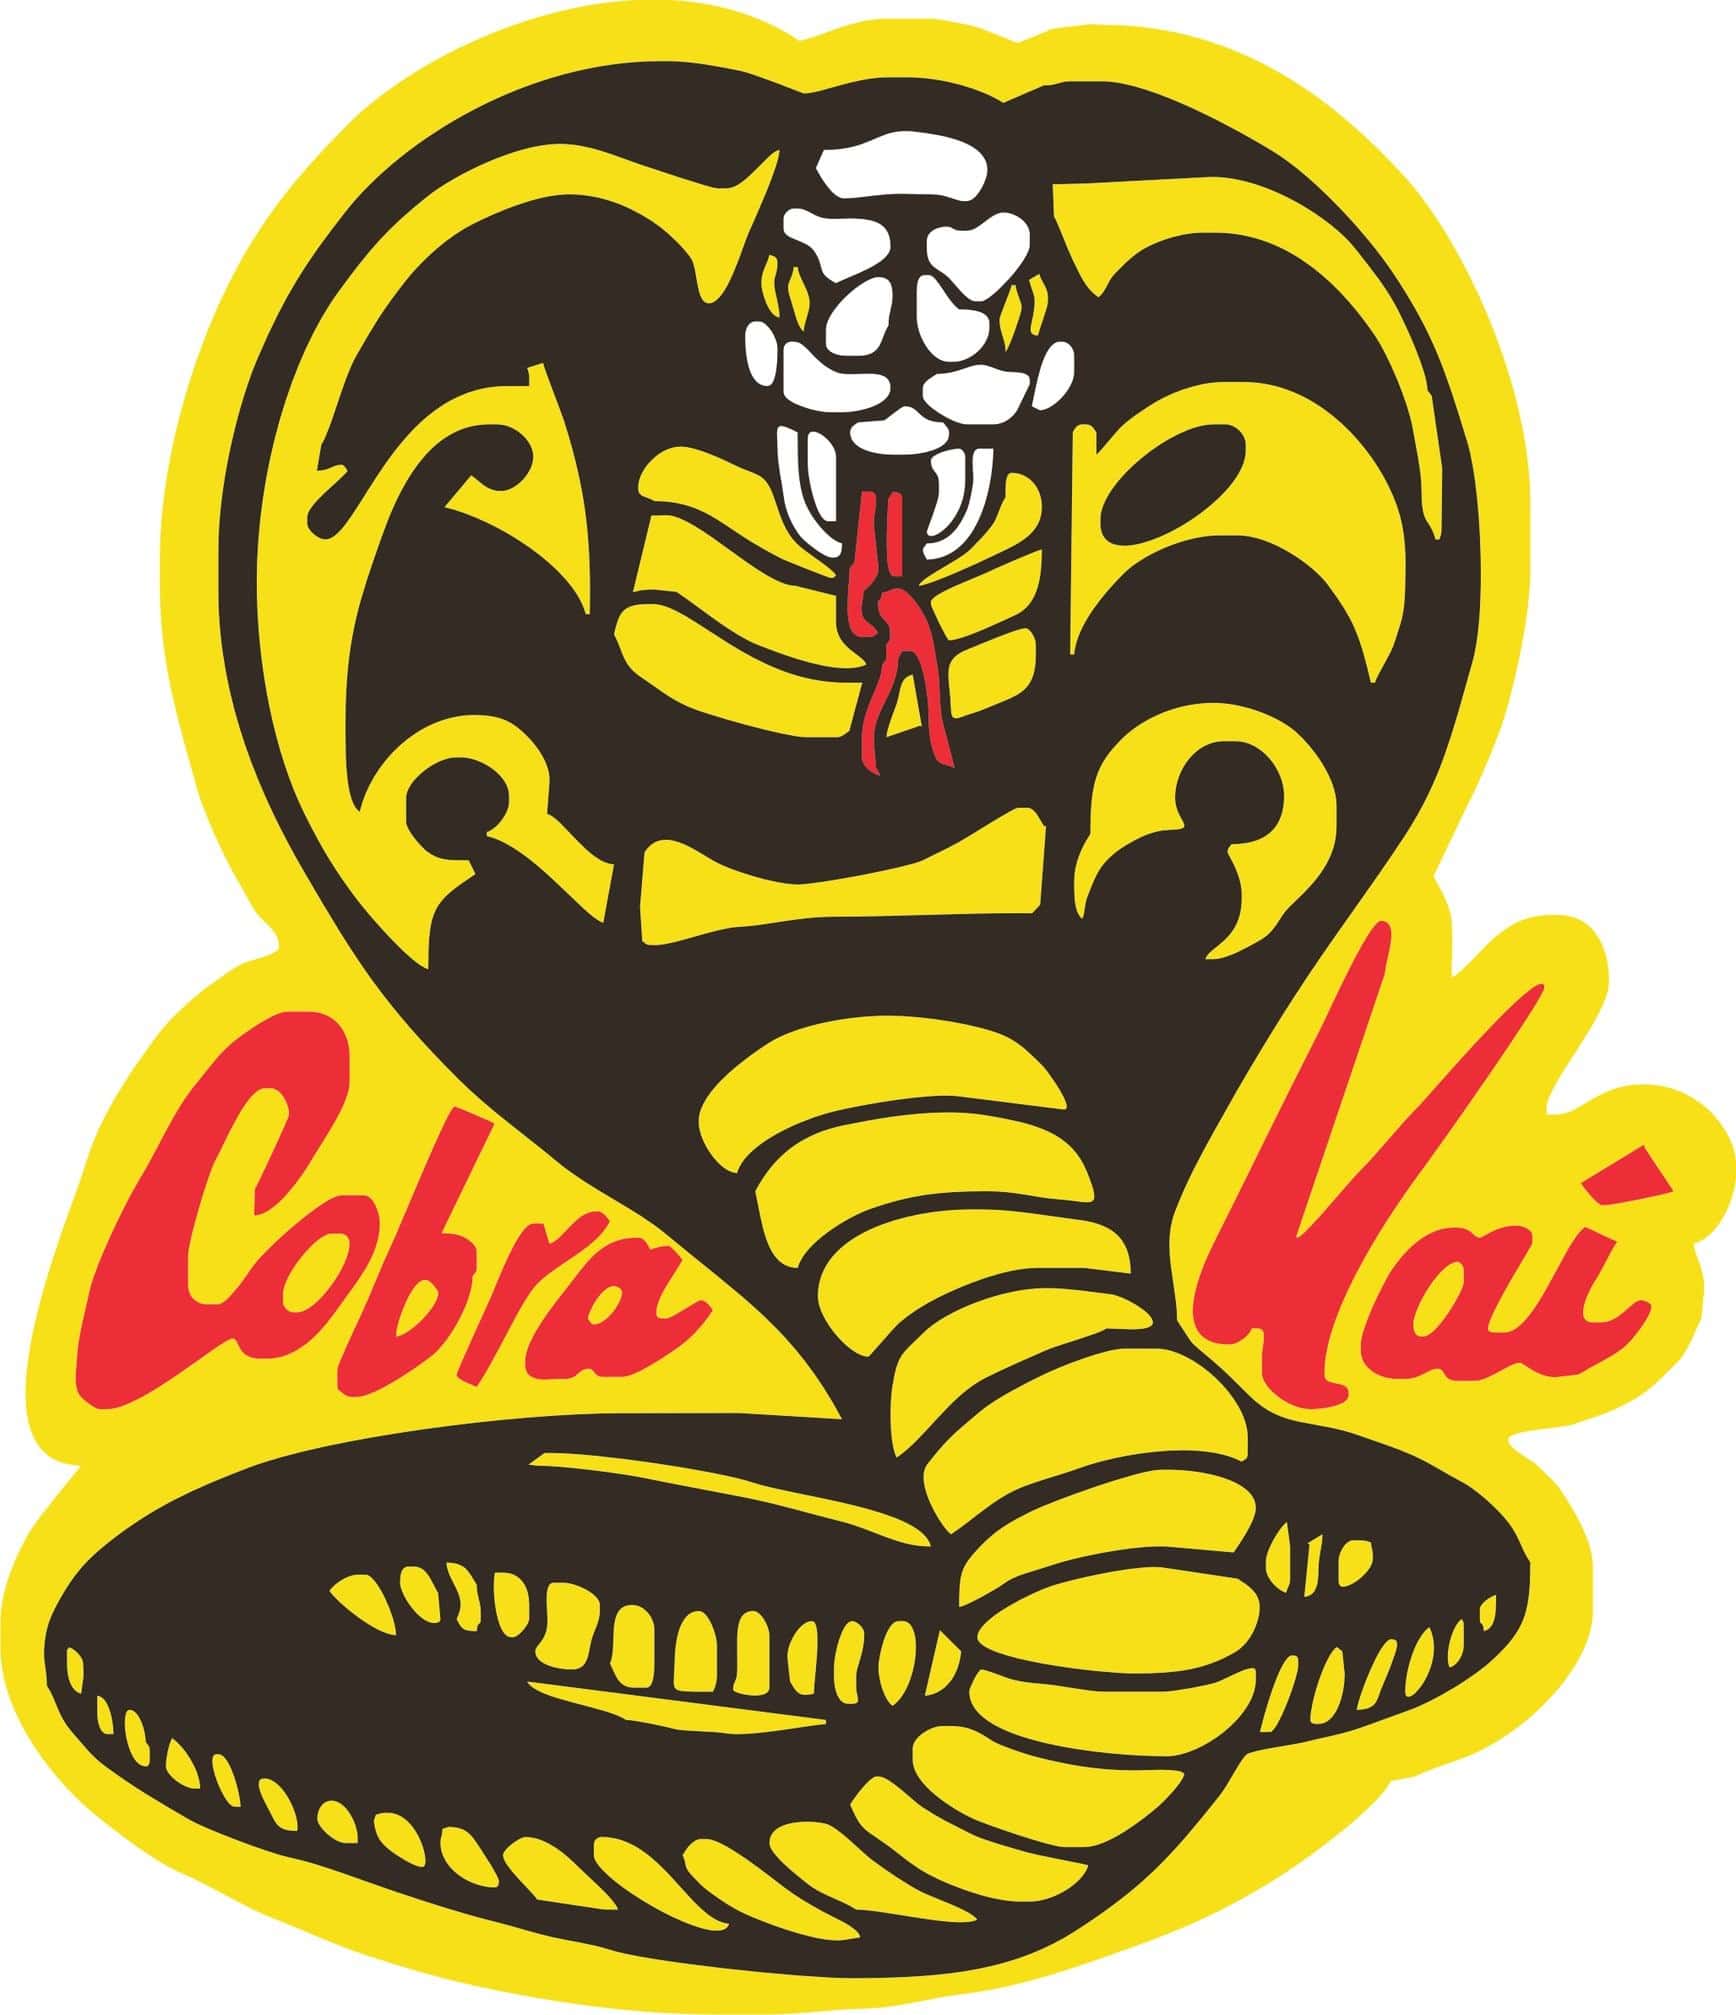 Cobra Kai Logo Wallpapers  Top 24 Best Cobra Kai Logo Wallpapers  HQ 